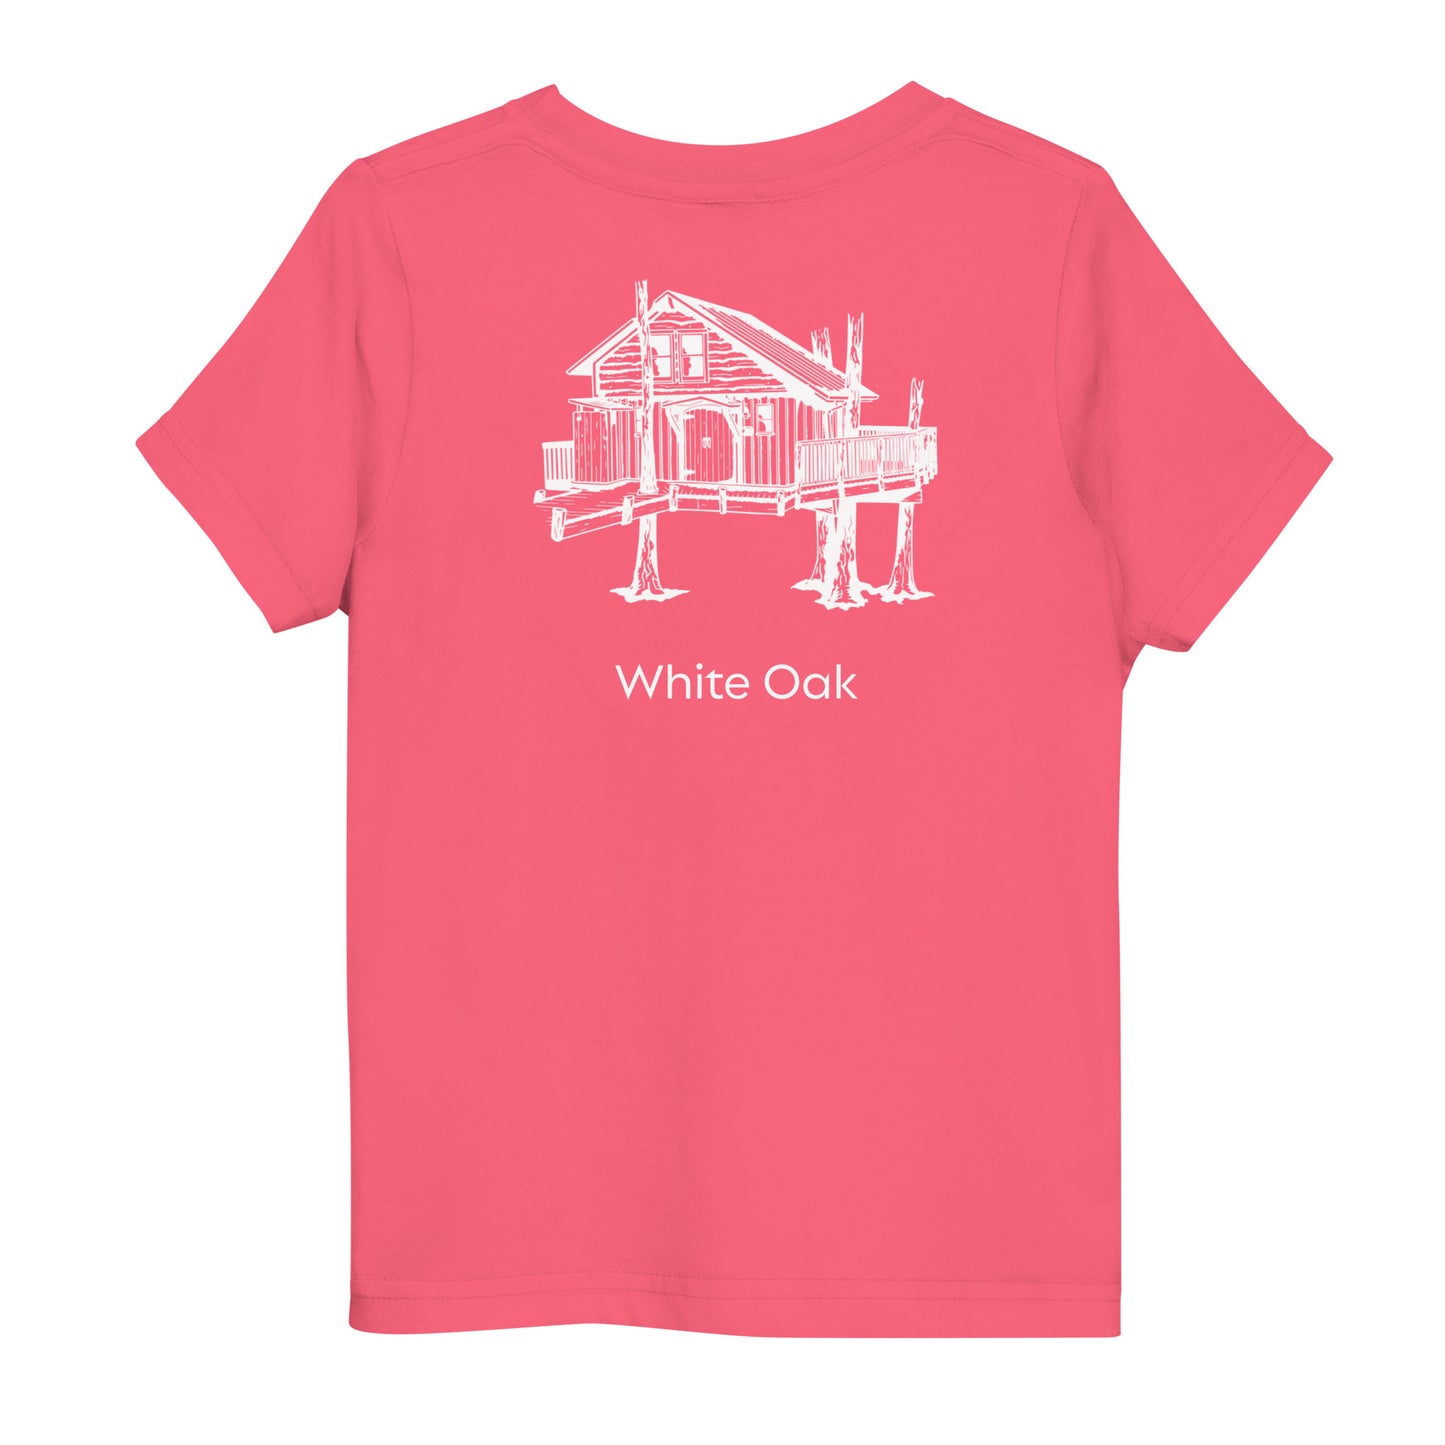 White Oak Toddler jersey t-shirt